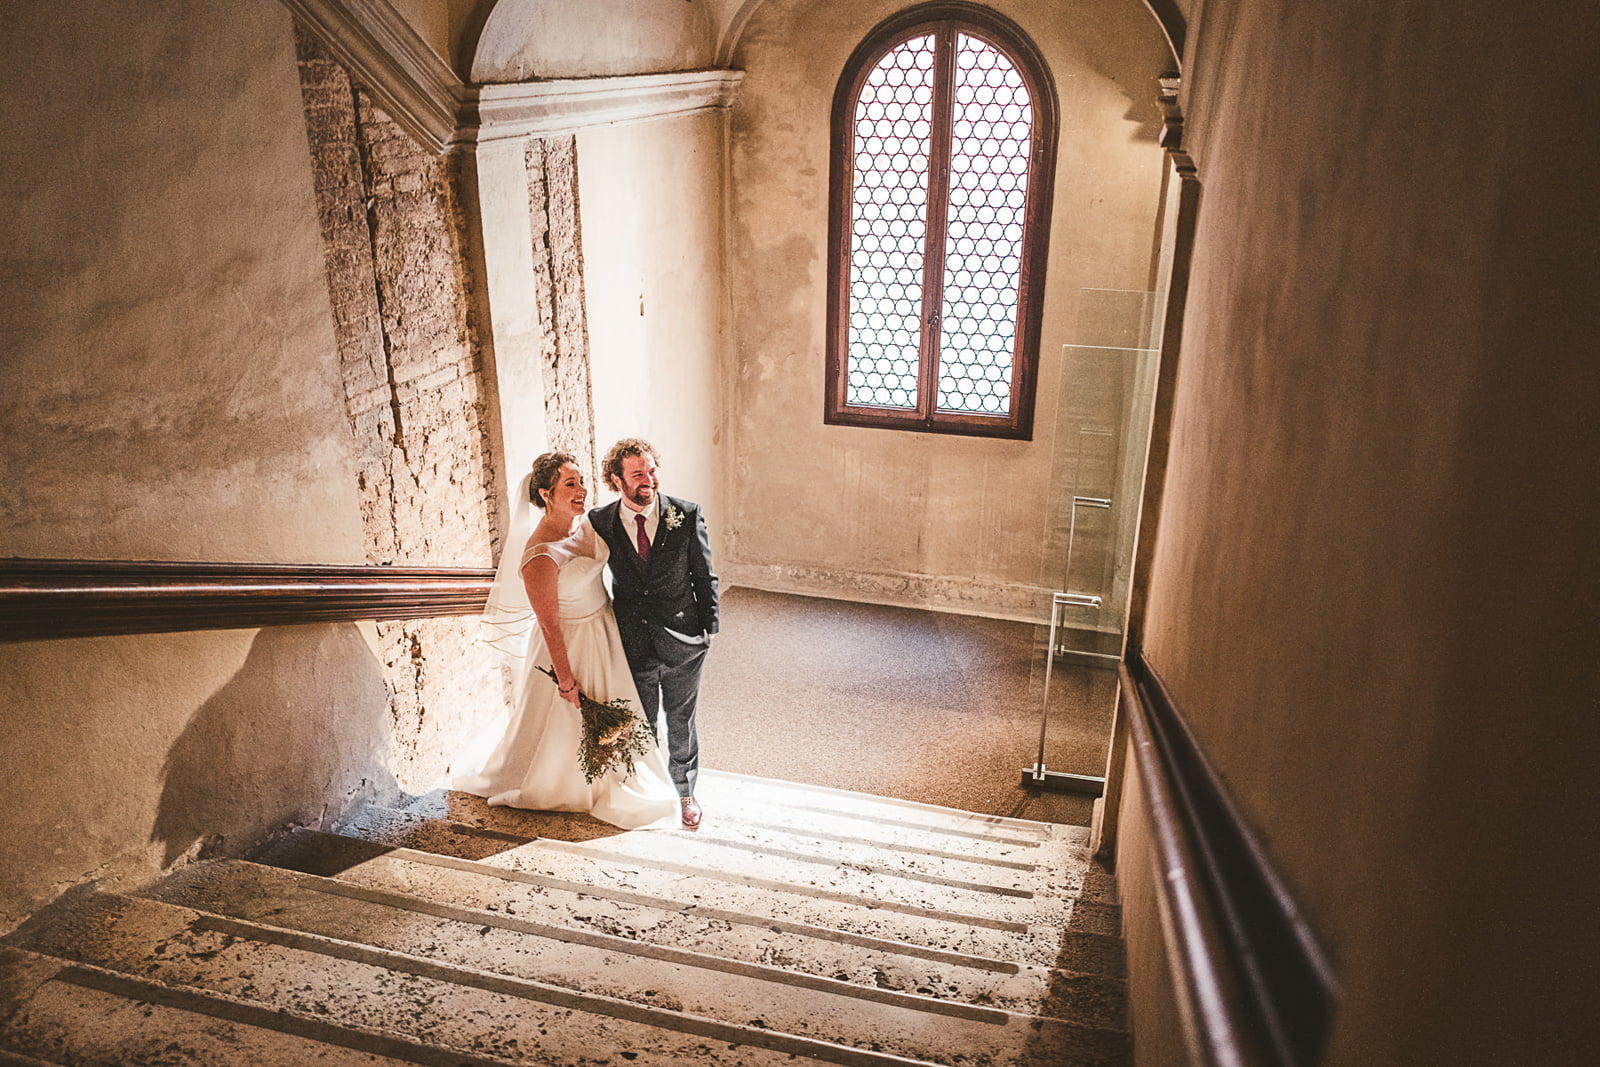 Wedding at Siena, A+L Wedding At Siena Town Hall &#8211; By Federico Pannacci Wedding Photographer, Federico Pannacci